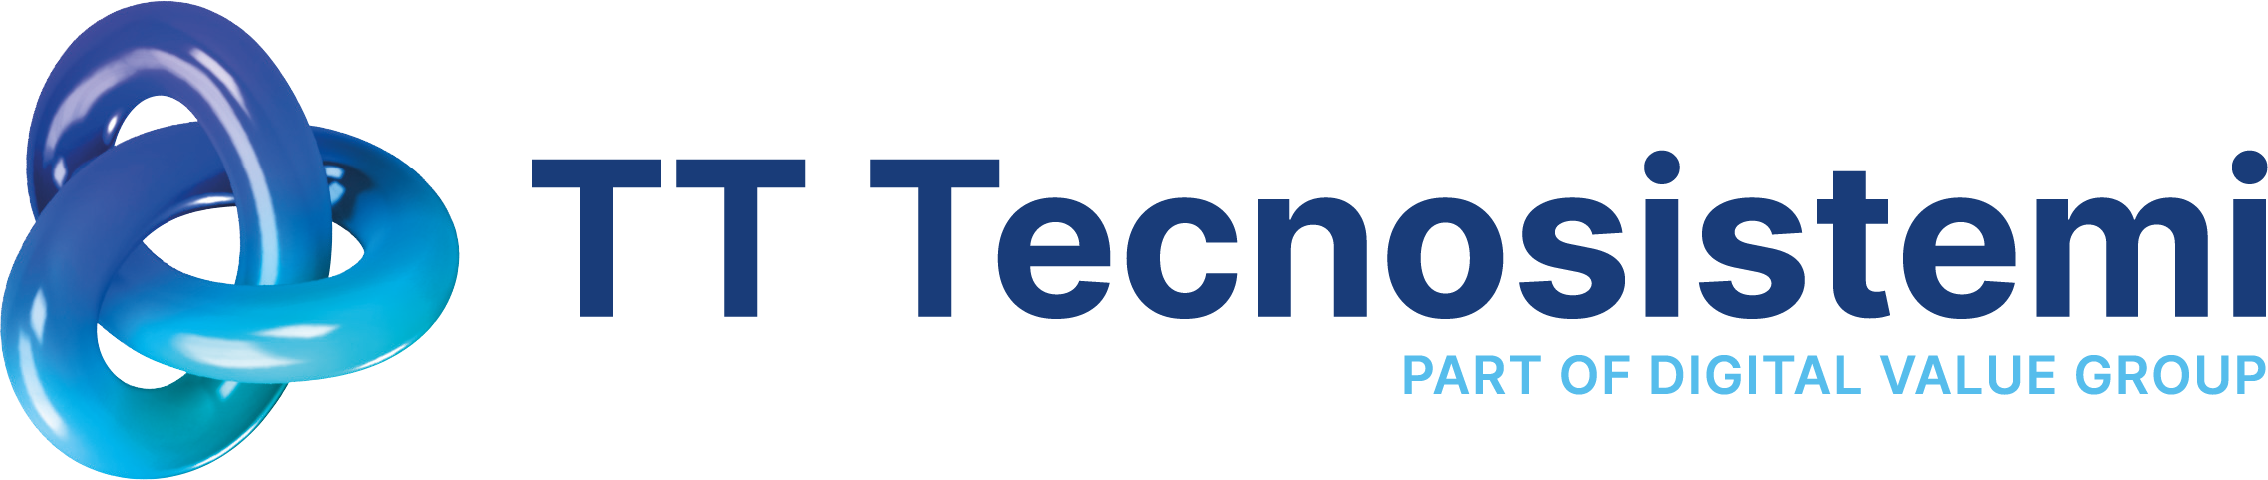 TT Tecnosistemi logo positivo